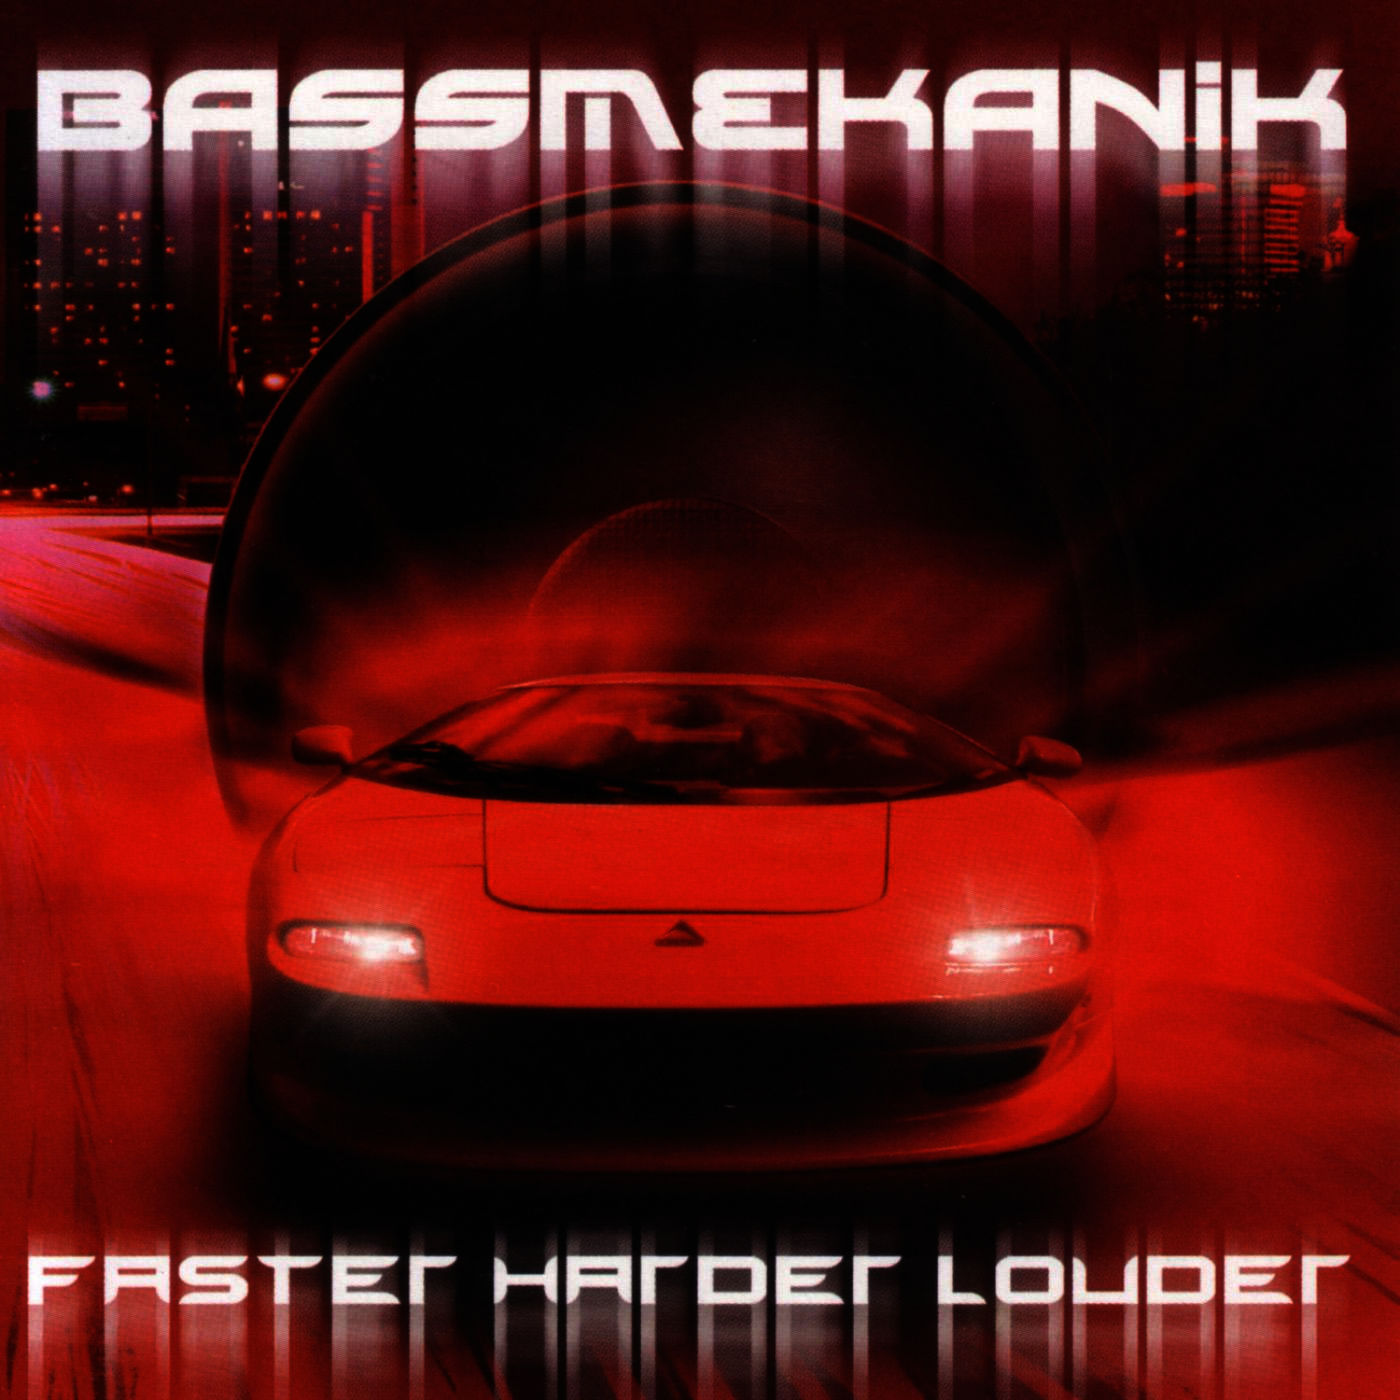 Faster harder песня speed up. Басс Меканик. Bass Mekanik 2004 Reload. Bass Mekanik музыкант. Bass Mekanik 2007 Boom Style.